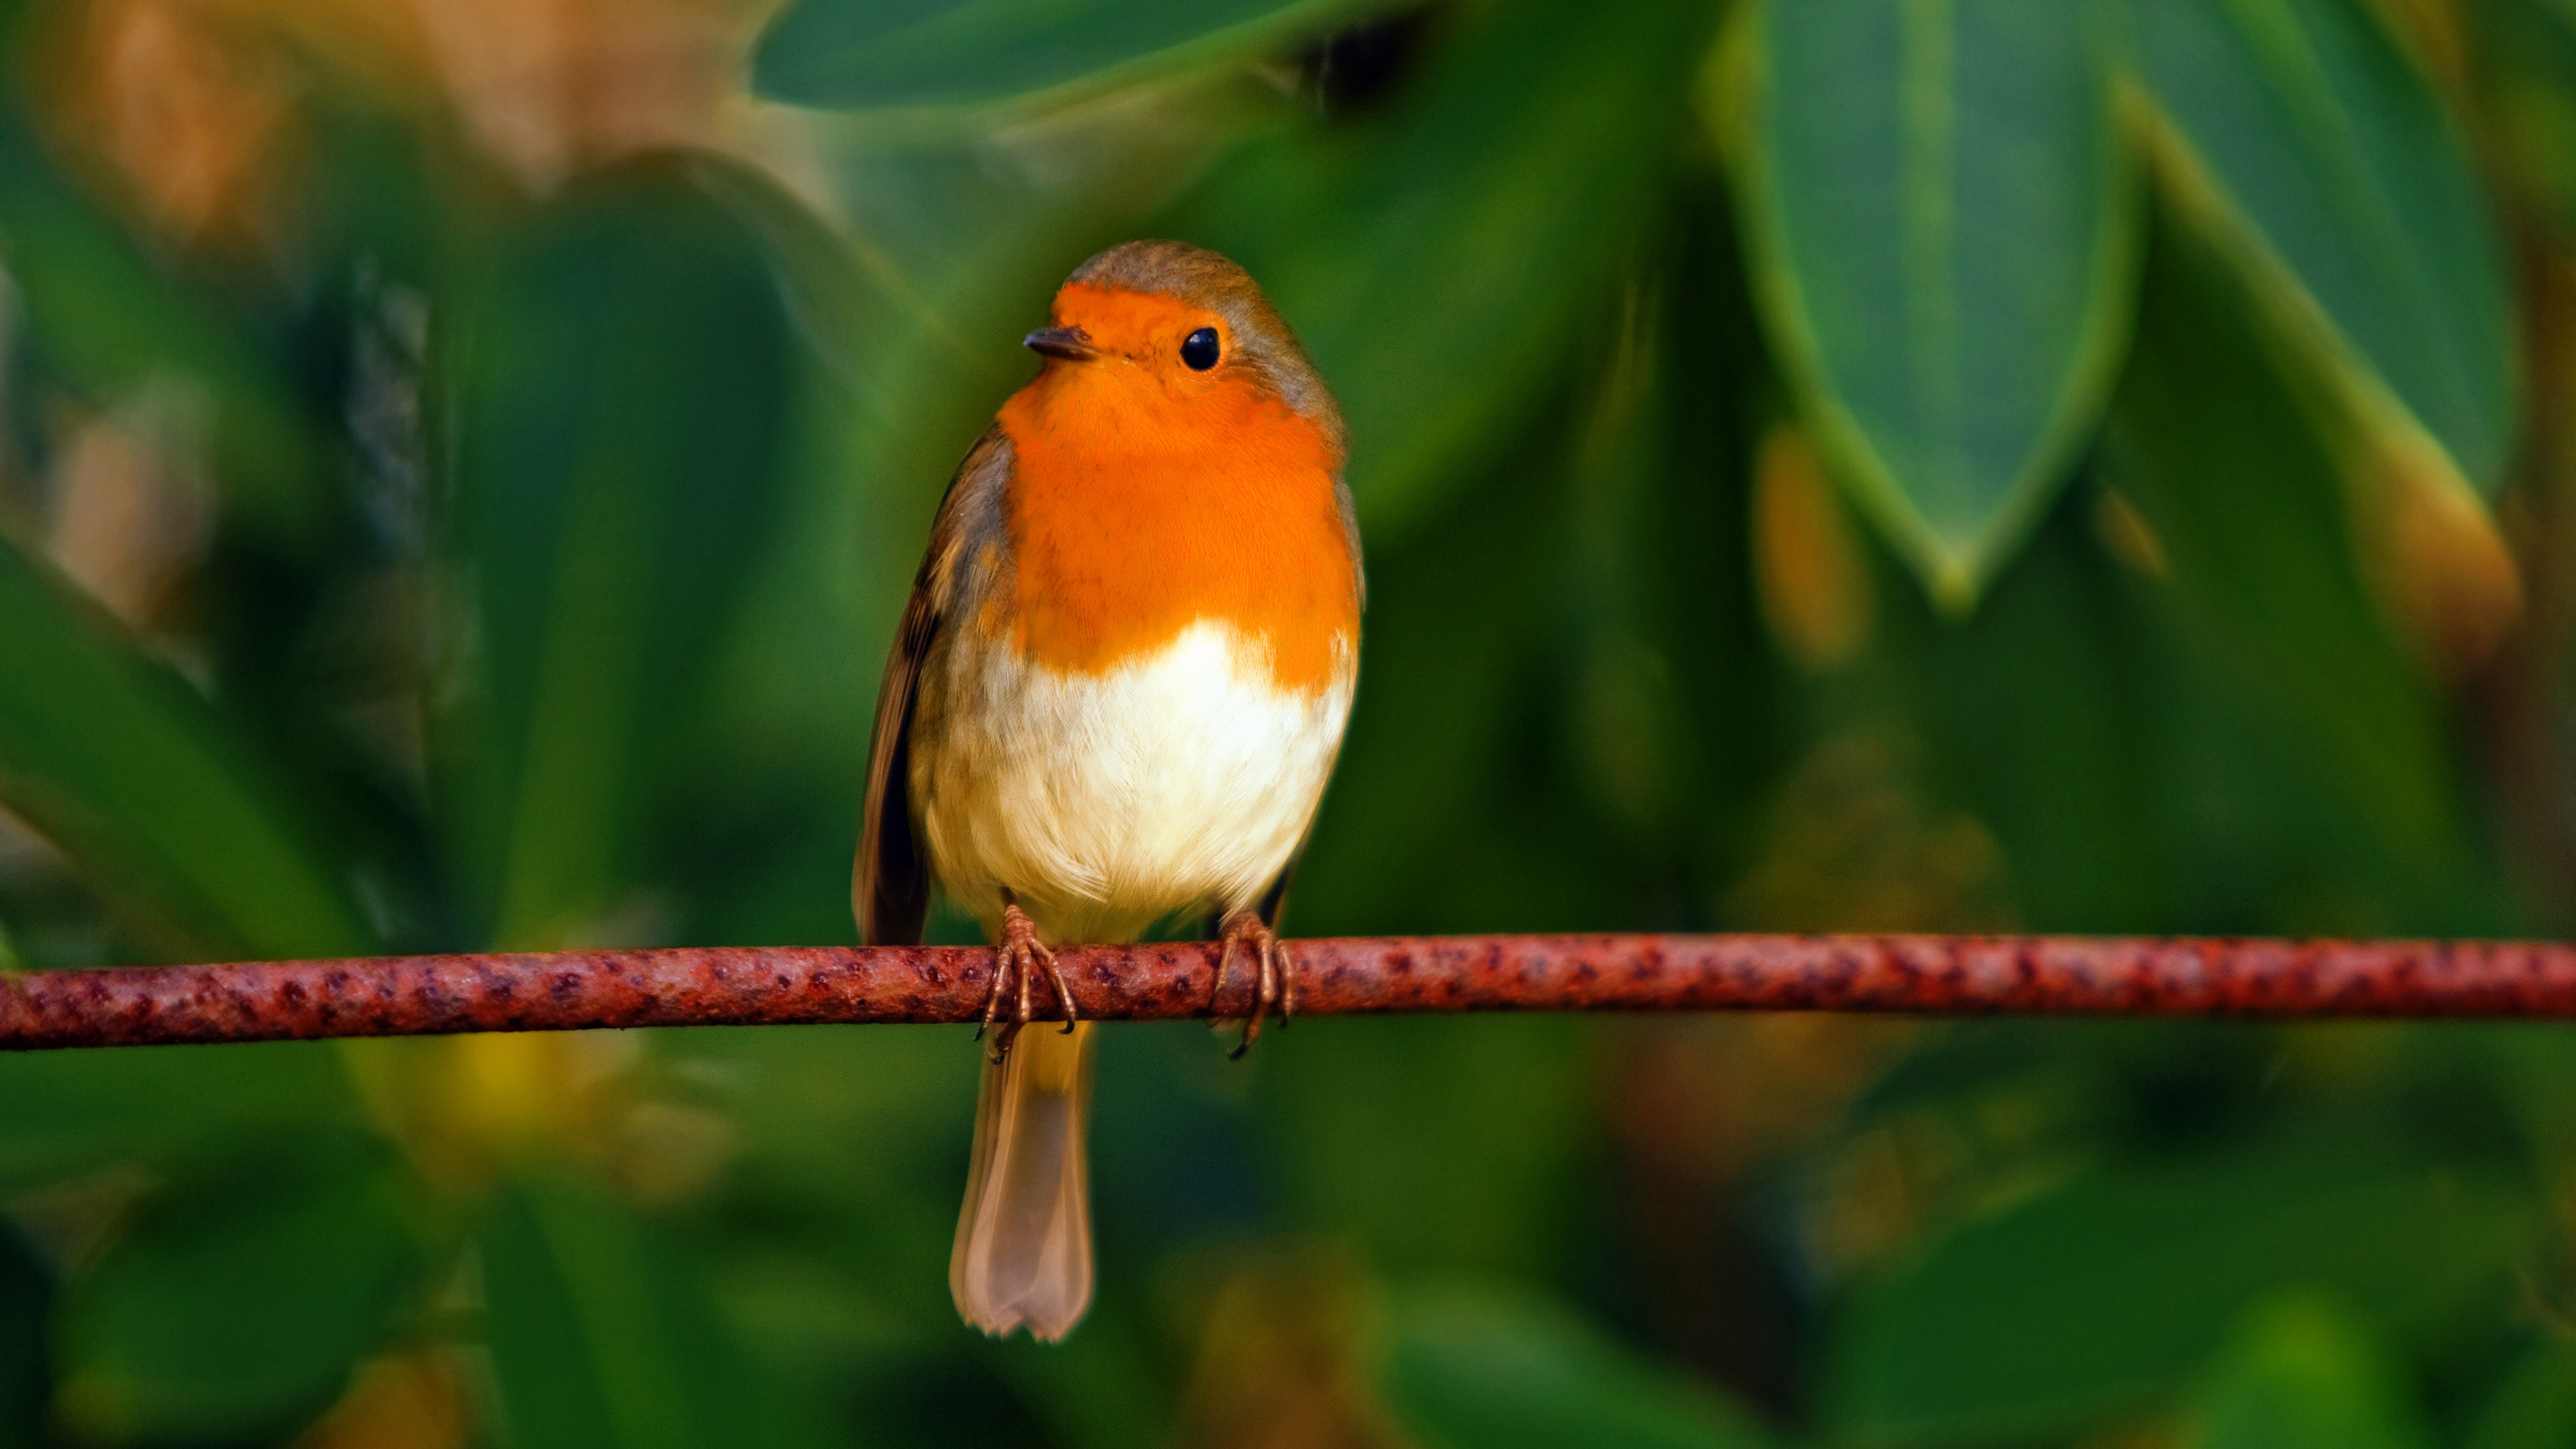 Robin bird, 4K wallpaper, Ultra HD resolution, Red plumage, 3840x2160 4K Desktop